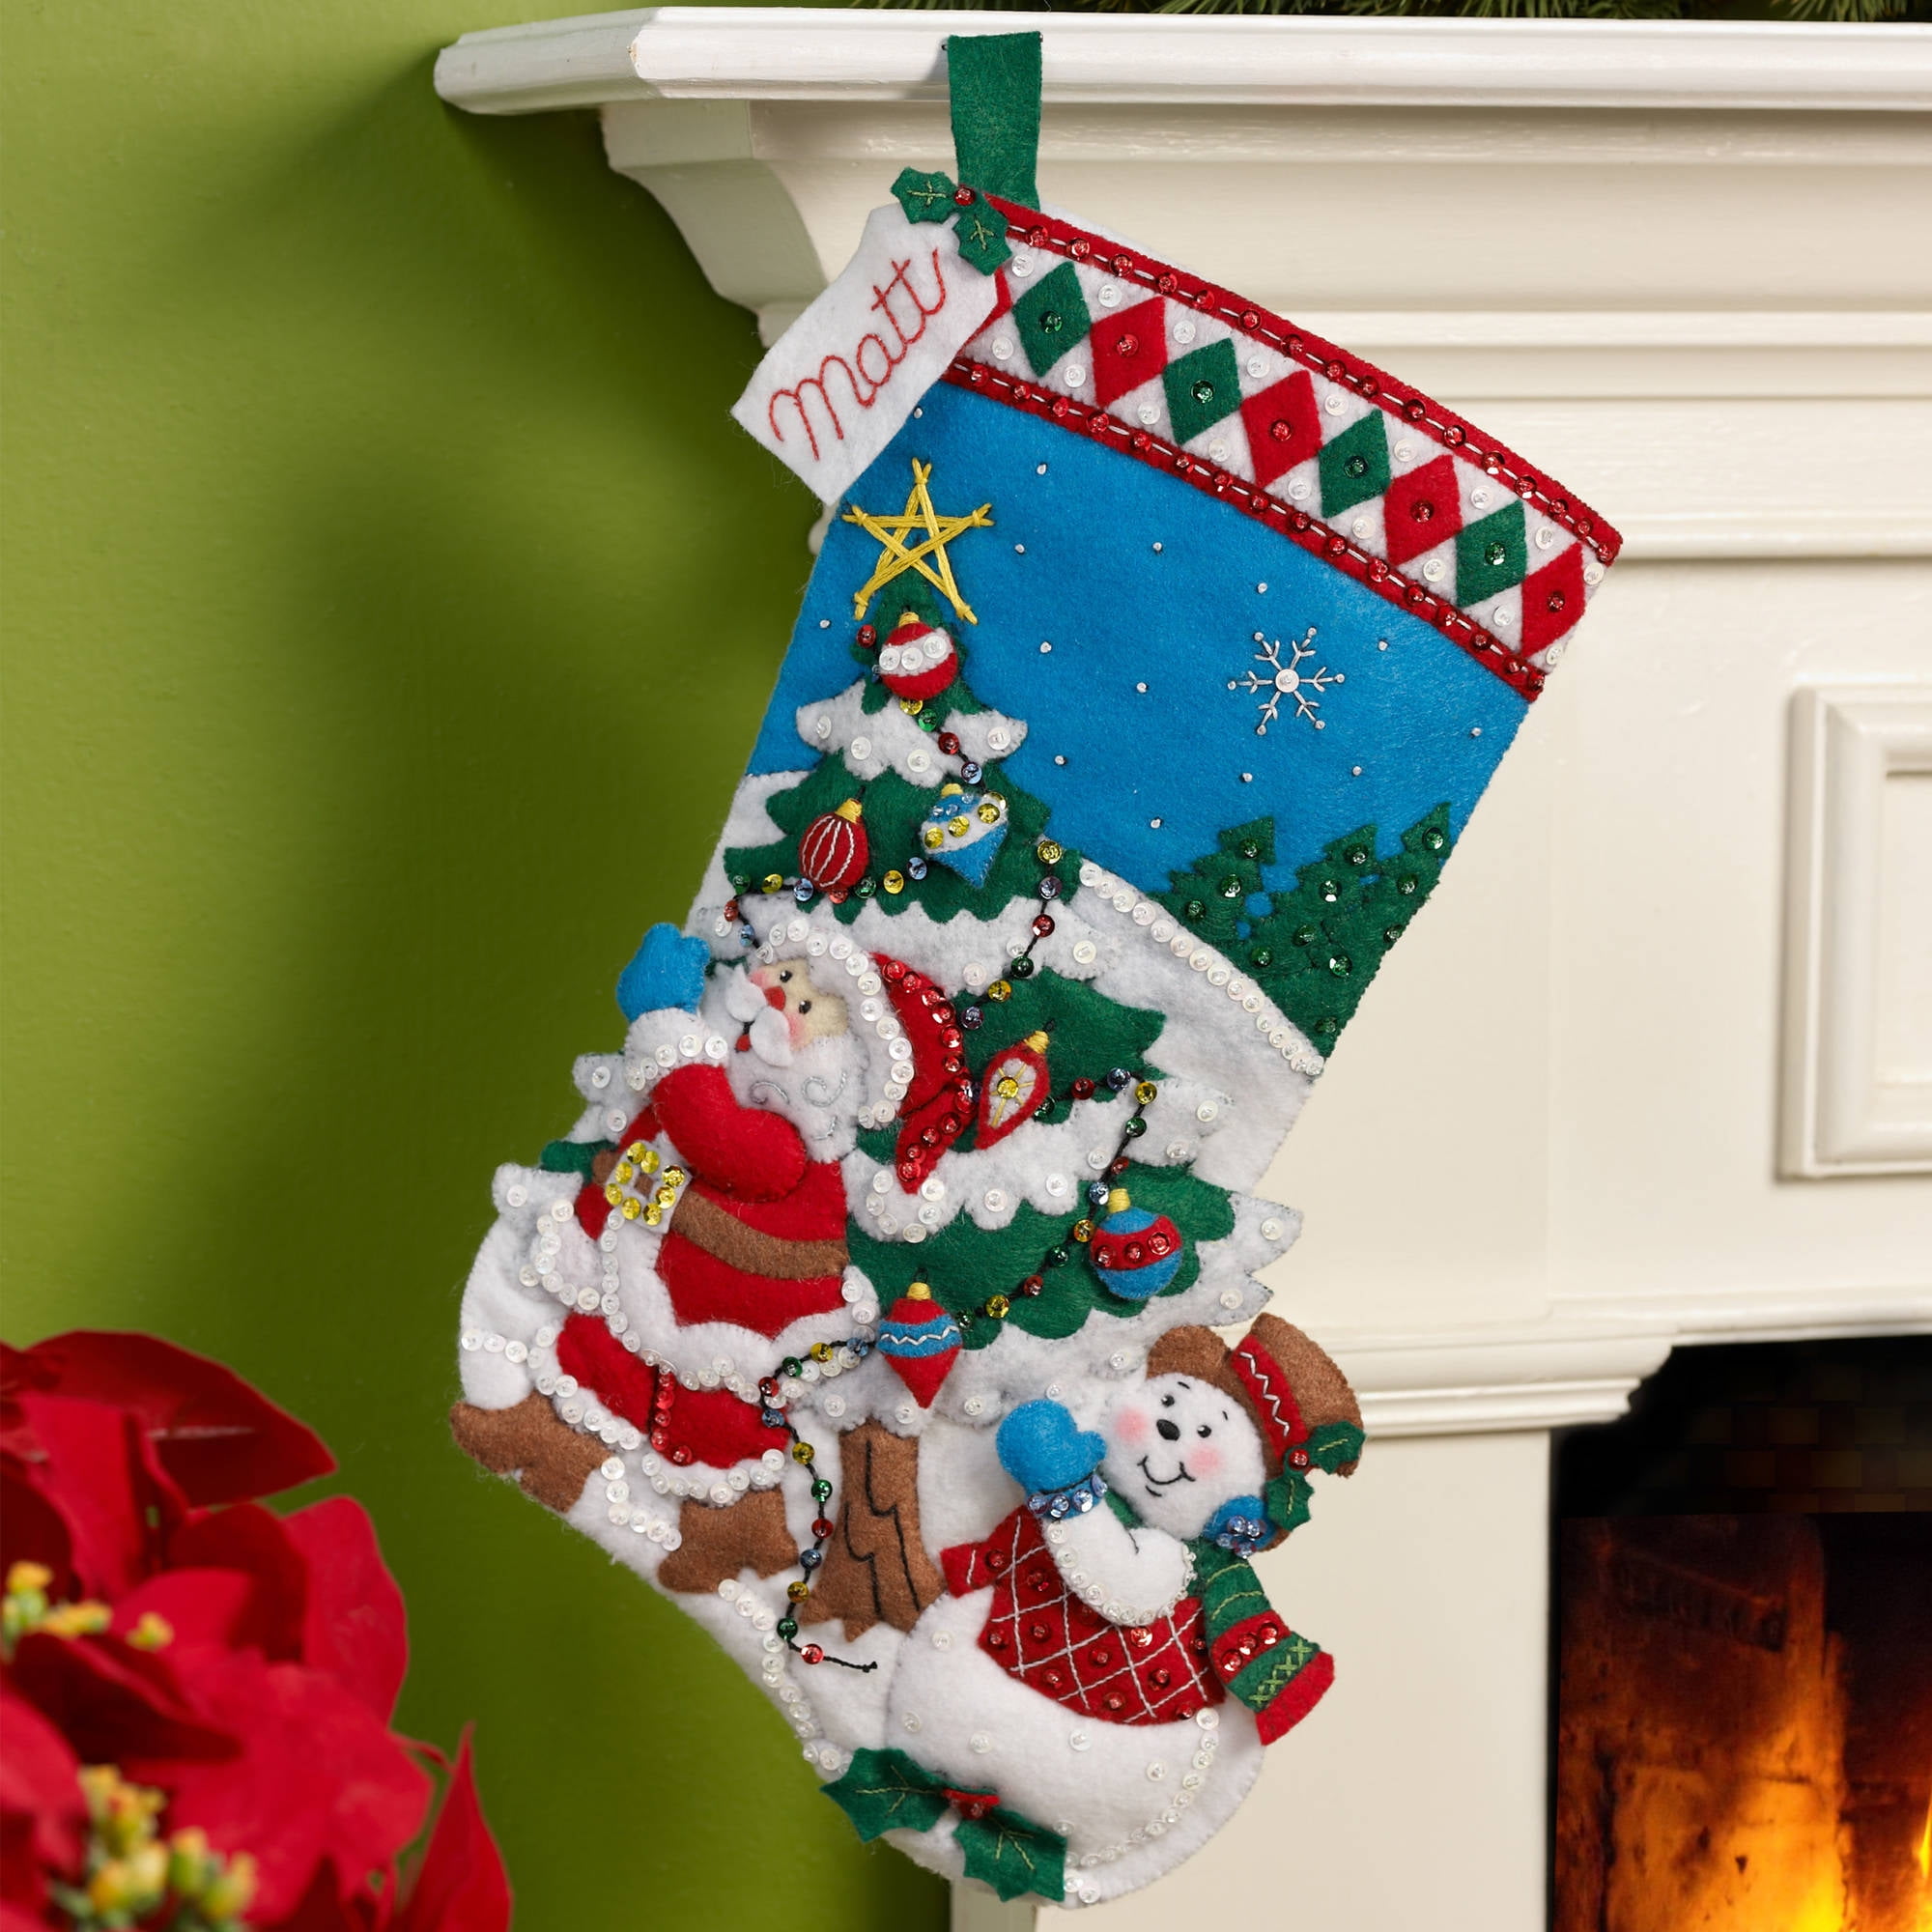 Shop Plaid Bucilla ® Seasonal - Felt - Stocking Kits - Christmas